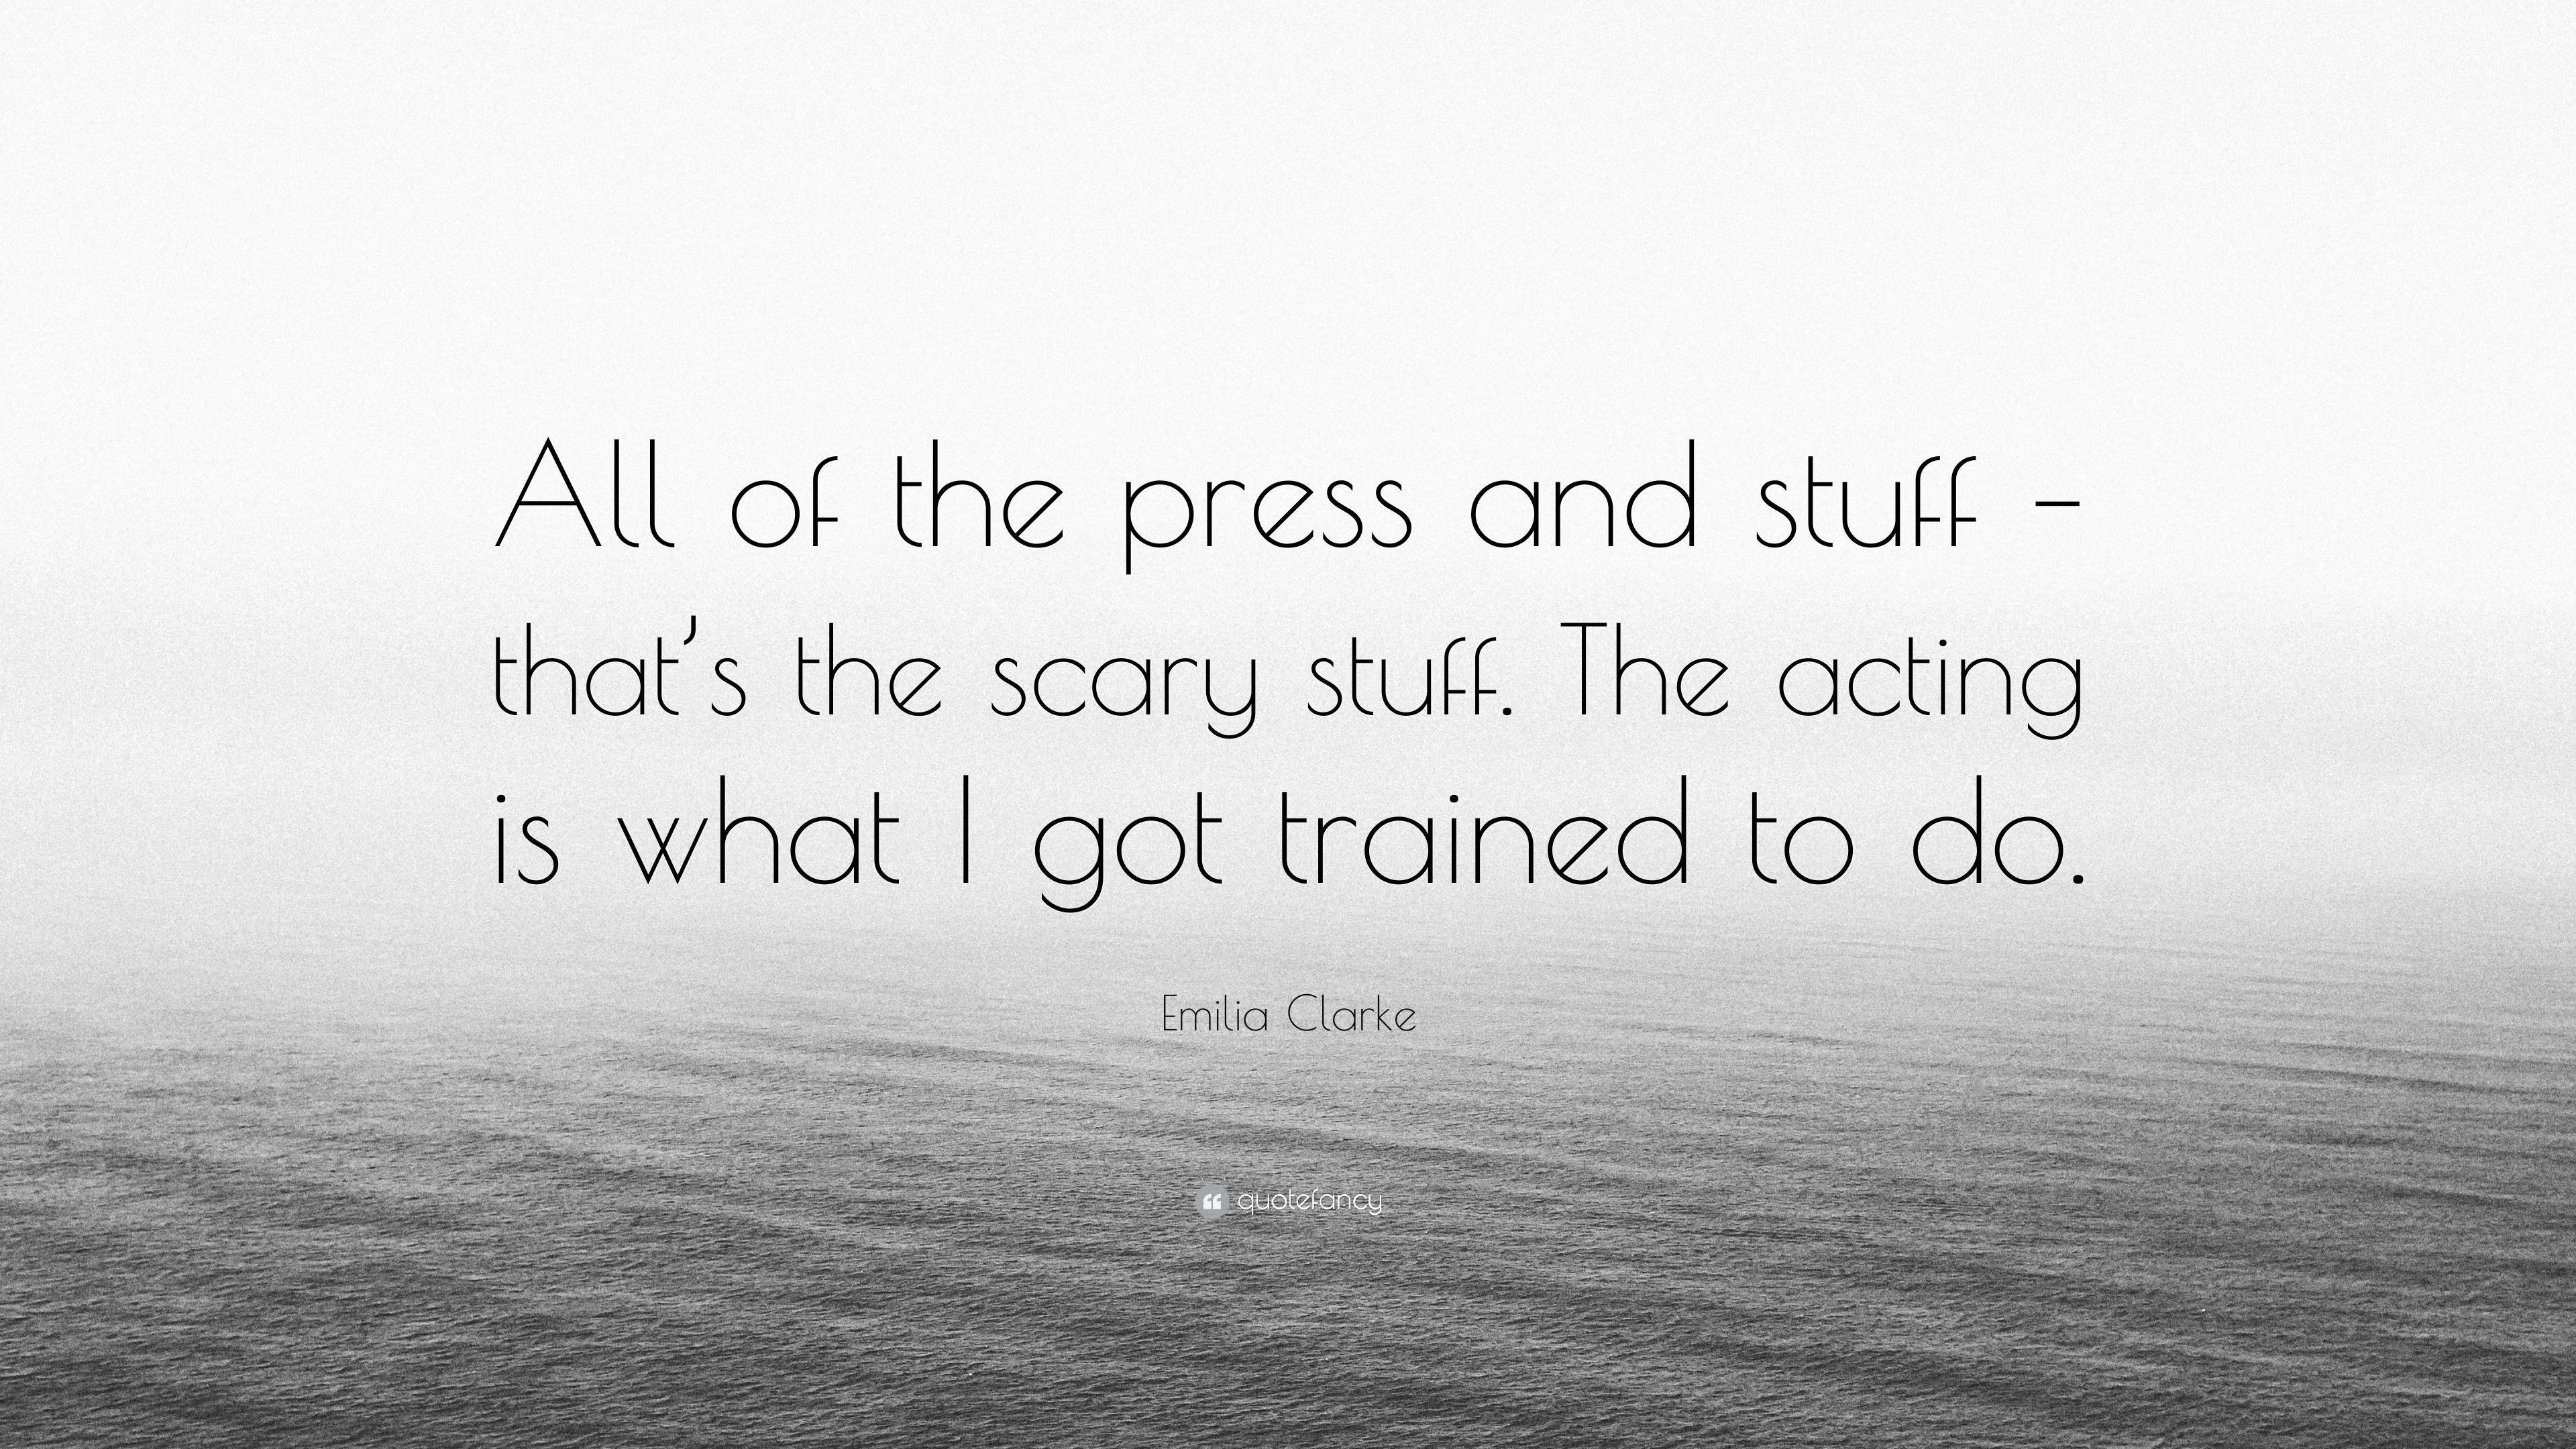 Emilia Clarke Quote: “All of the press and stuff